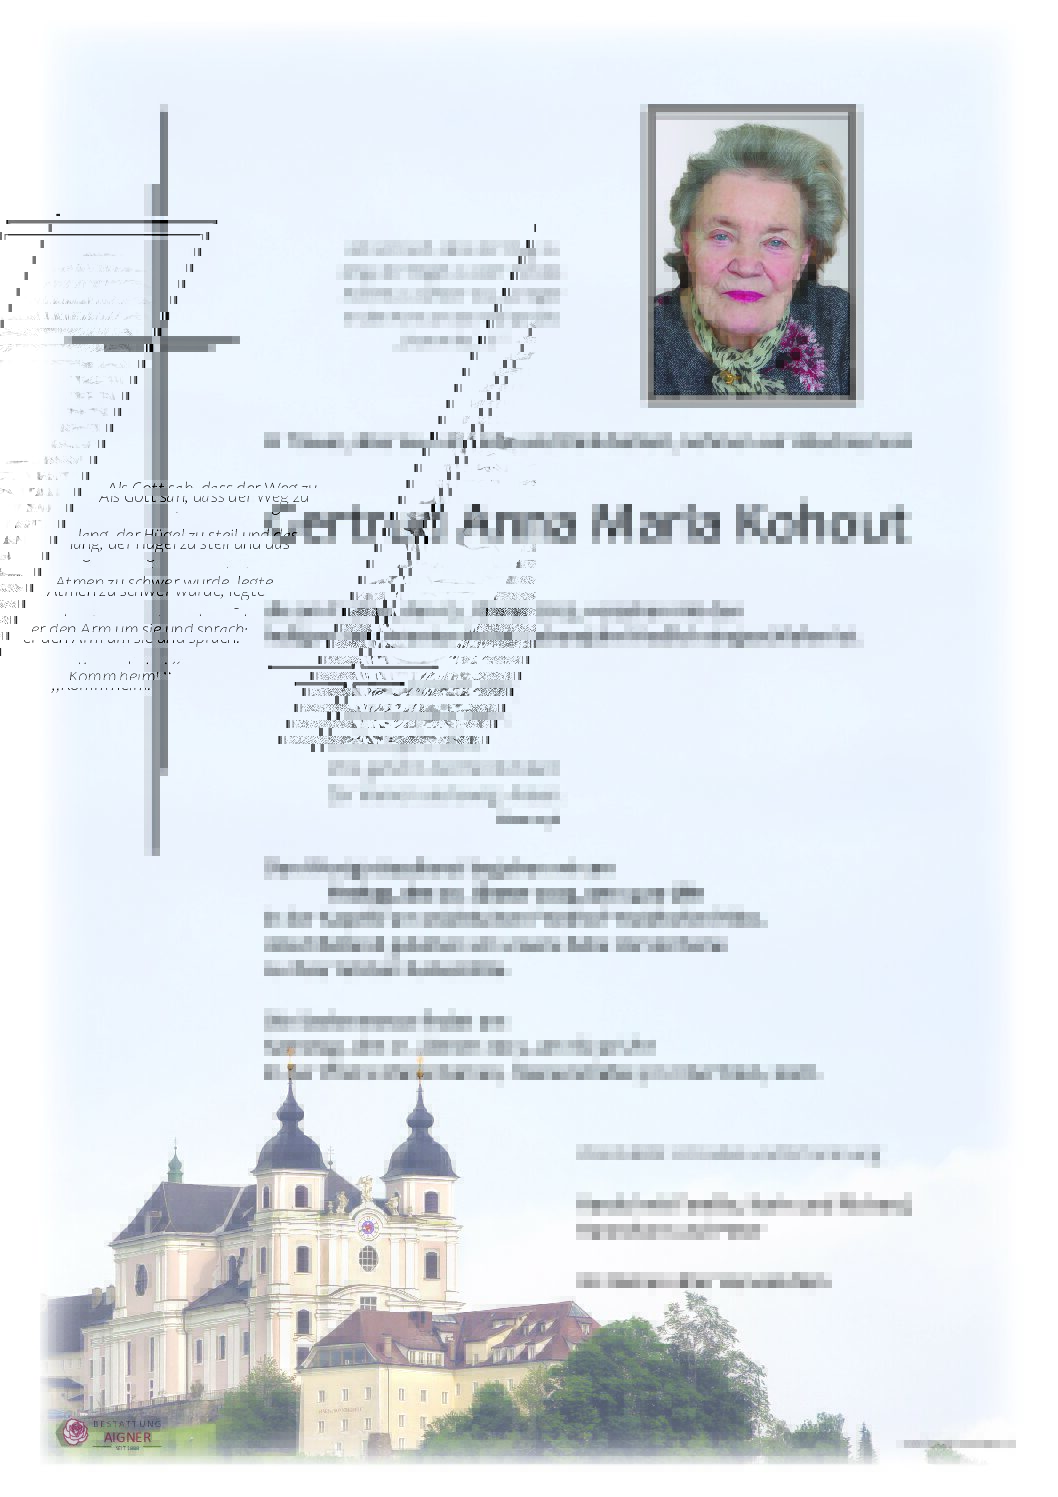 Gertrud Anna Maria Kohout